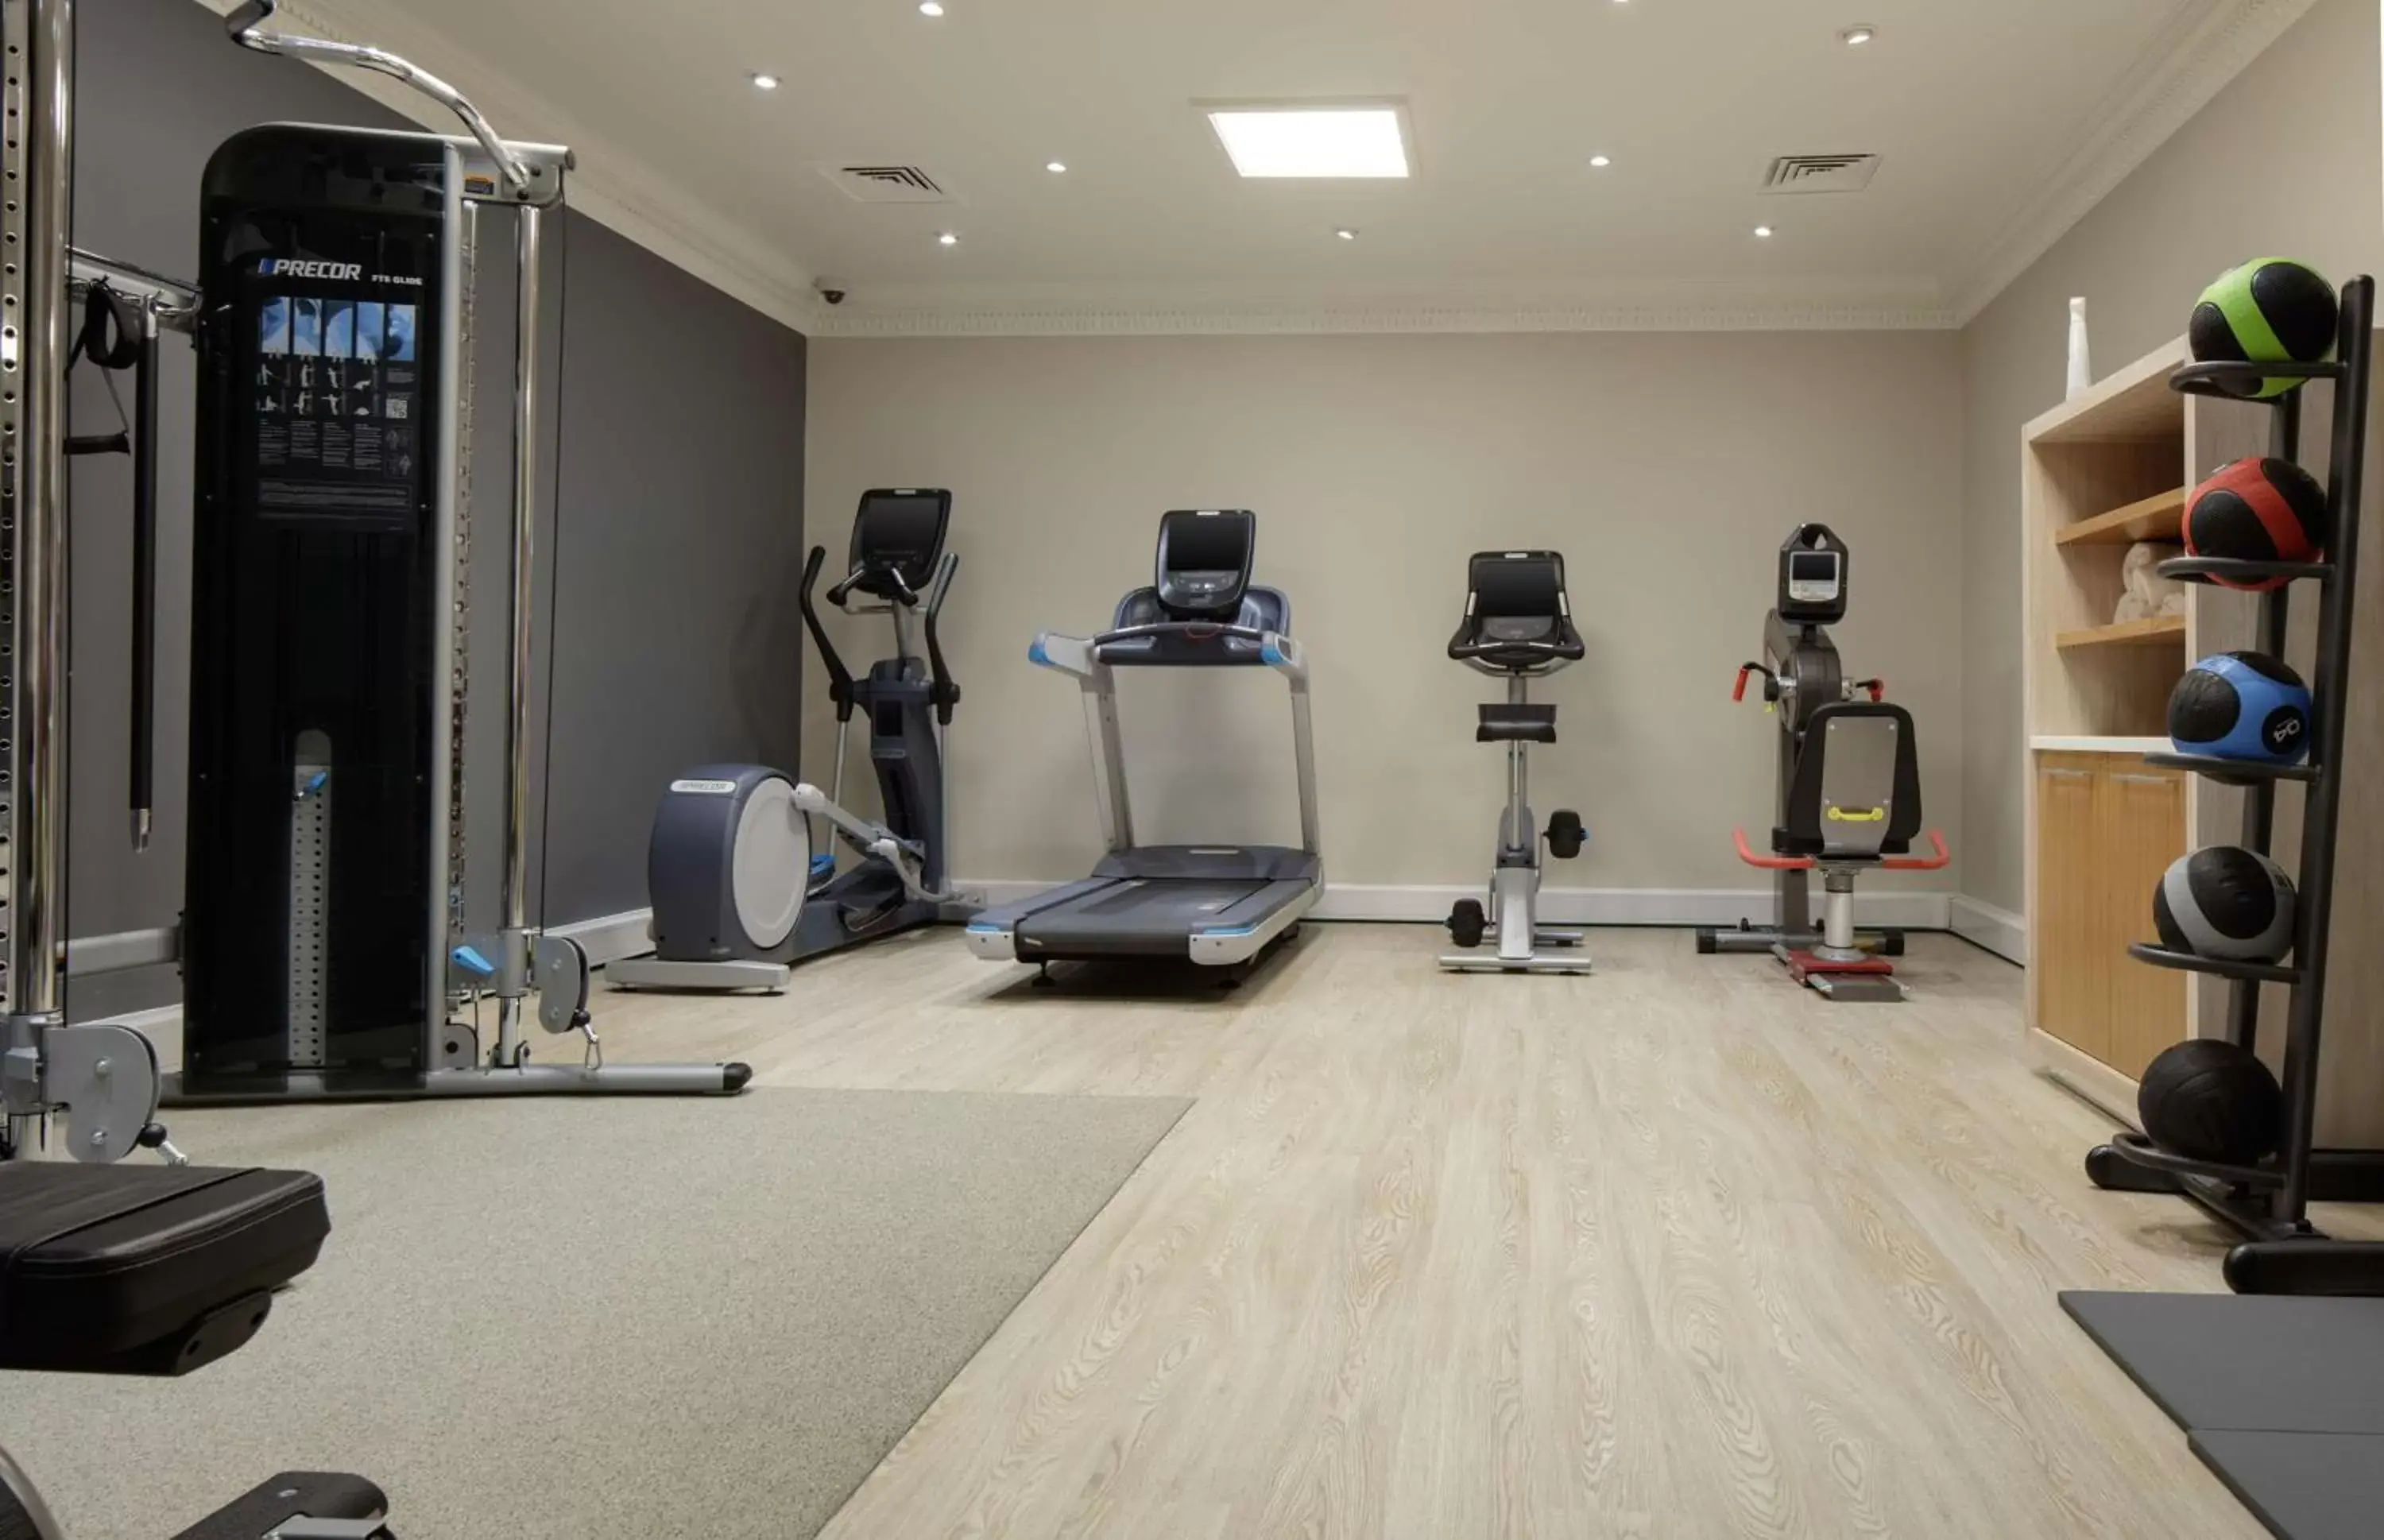 Fitness centre/facilities, Fitness Center/Facilities in Hilton York